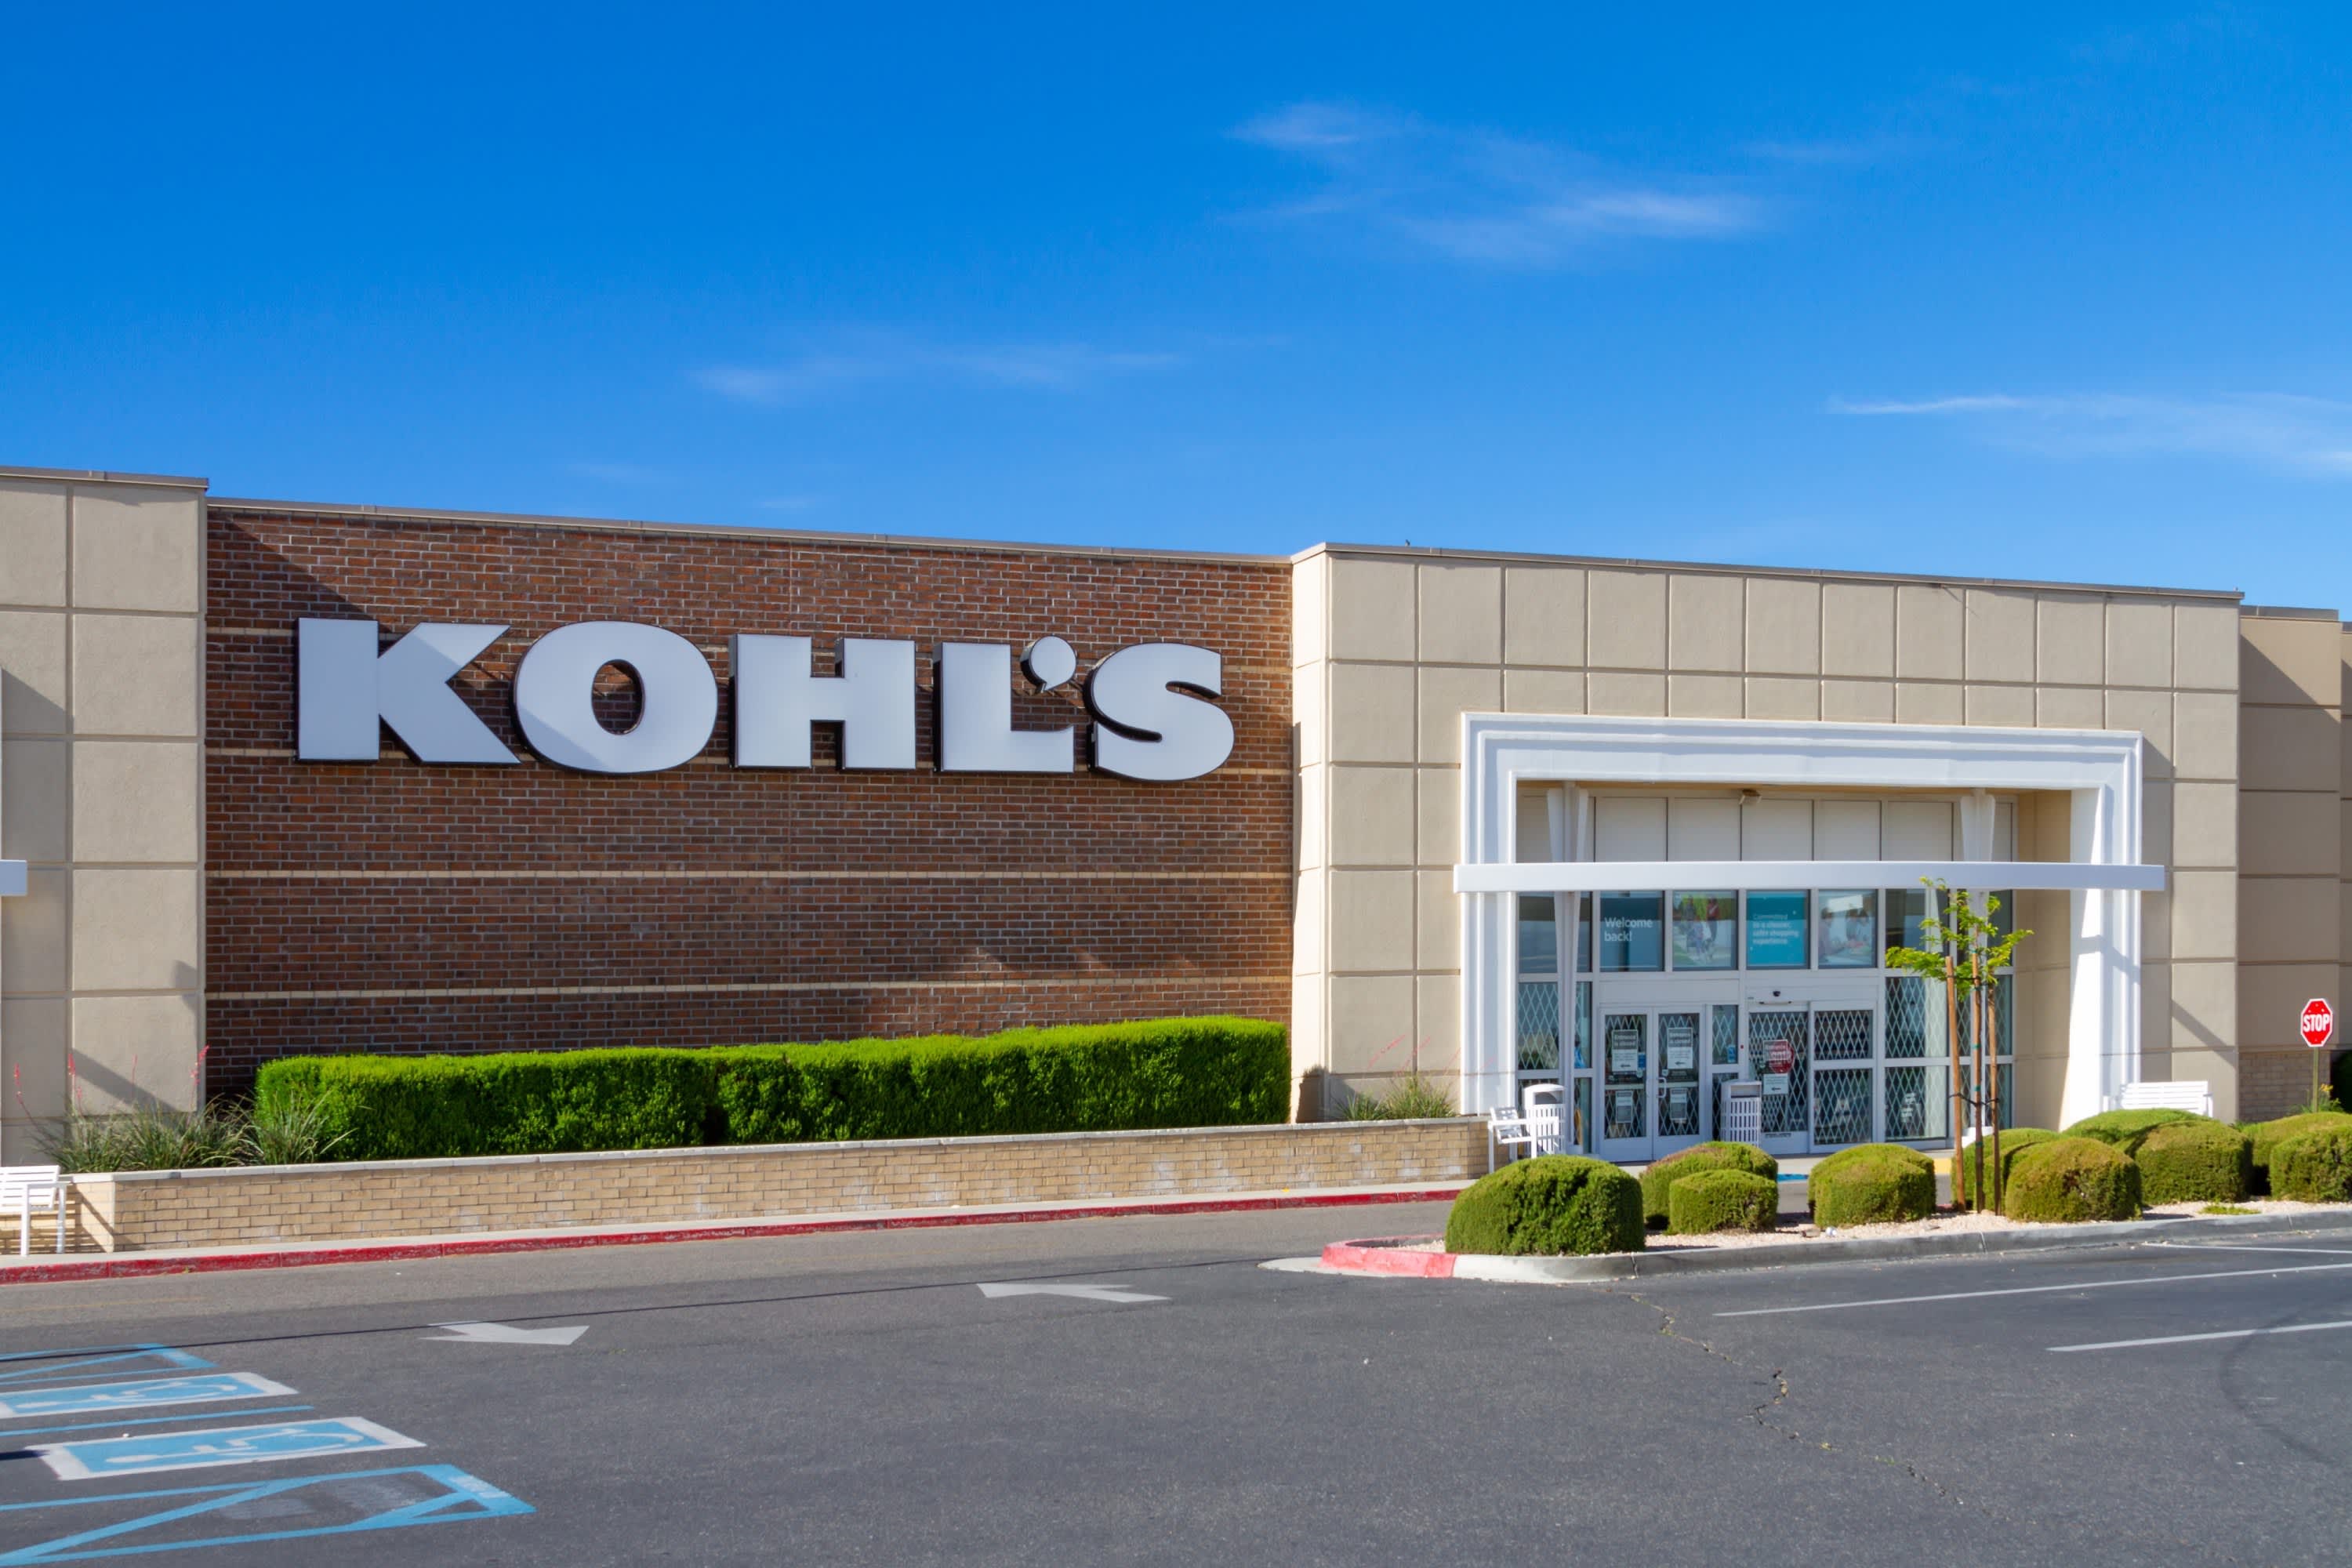 TJ Maxx Vs. Kohls: Which Store Is Better?